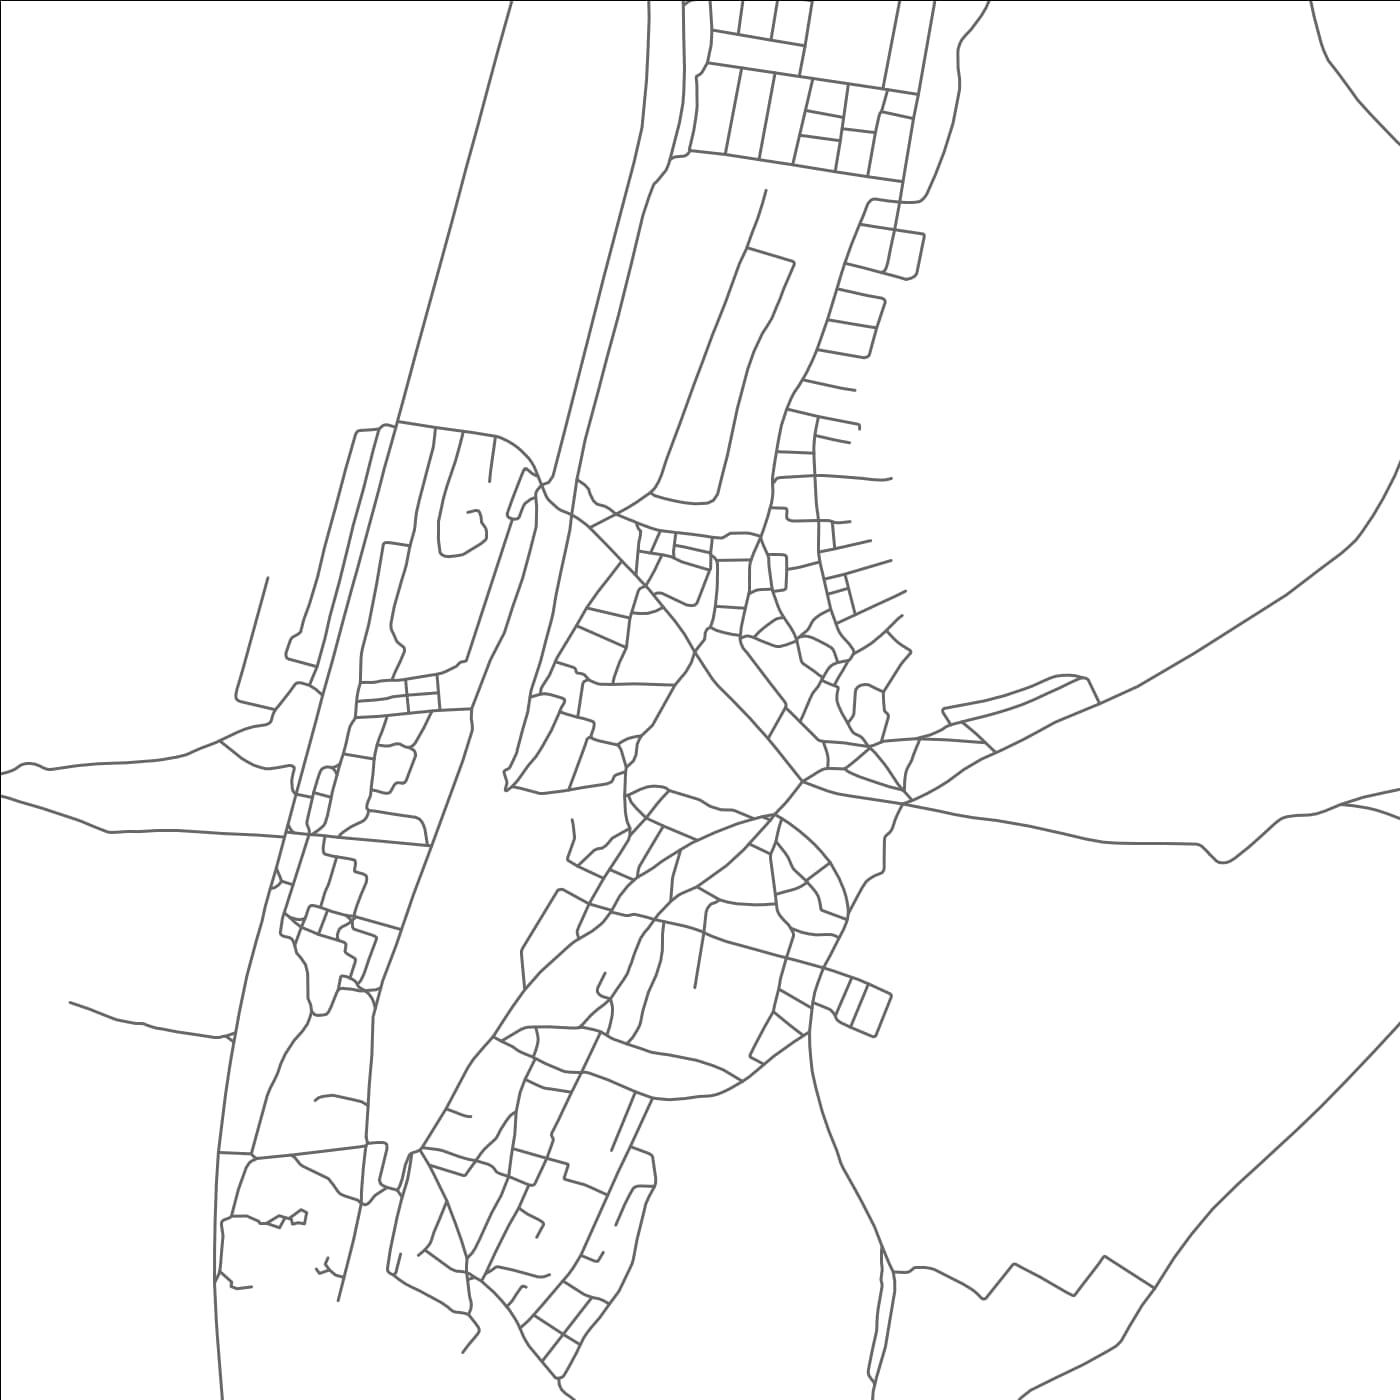 ROAD MAP OF OTSE, BOTSWANA BY MAPBAKES